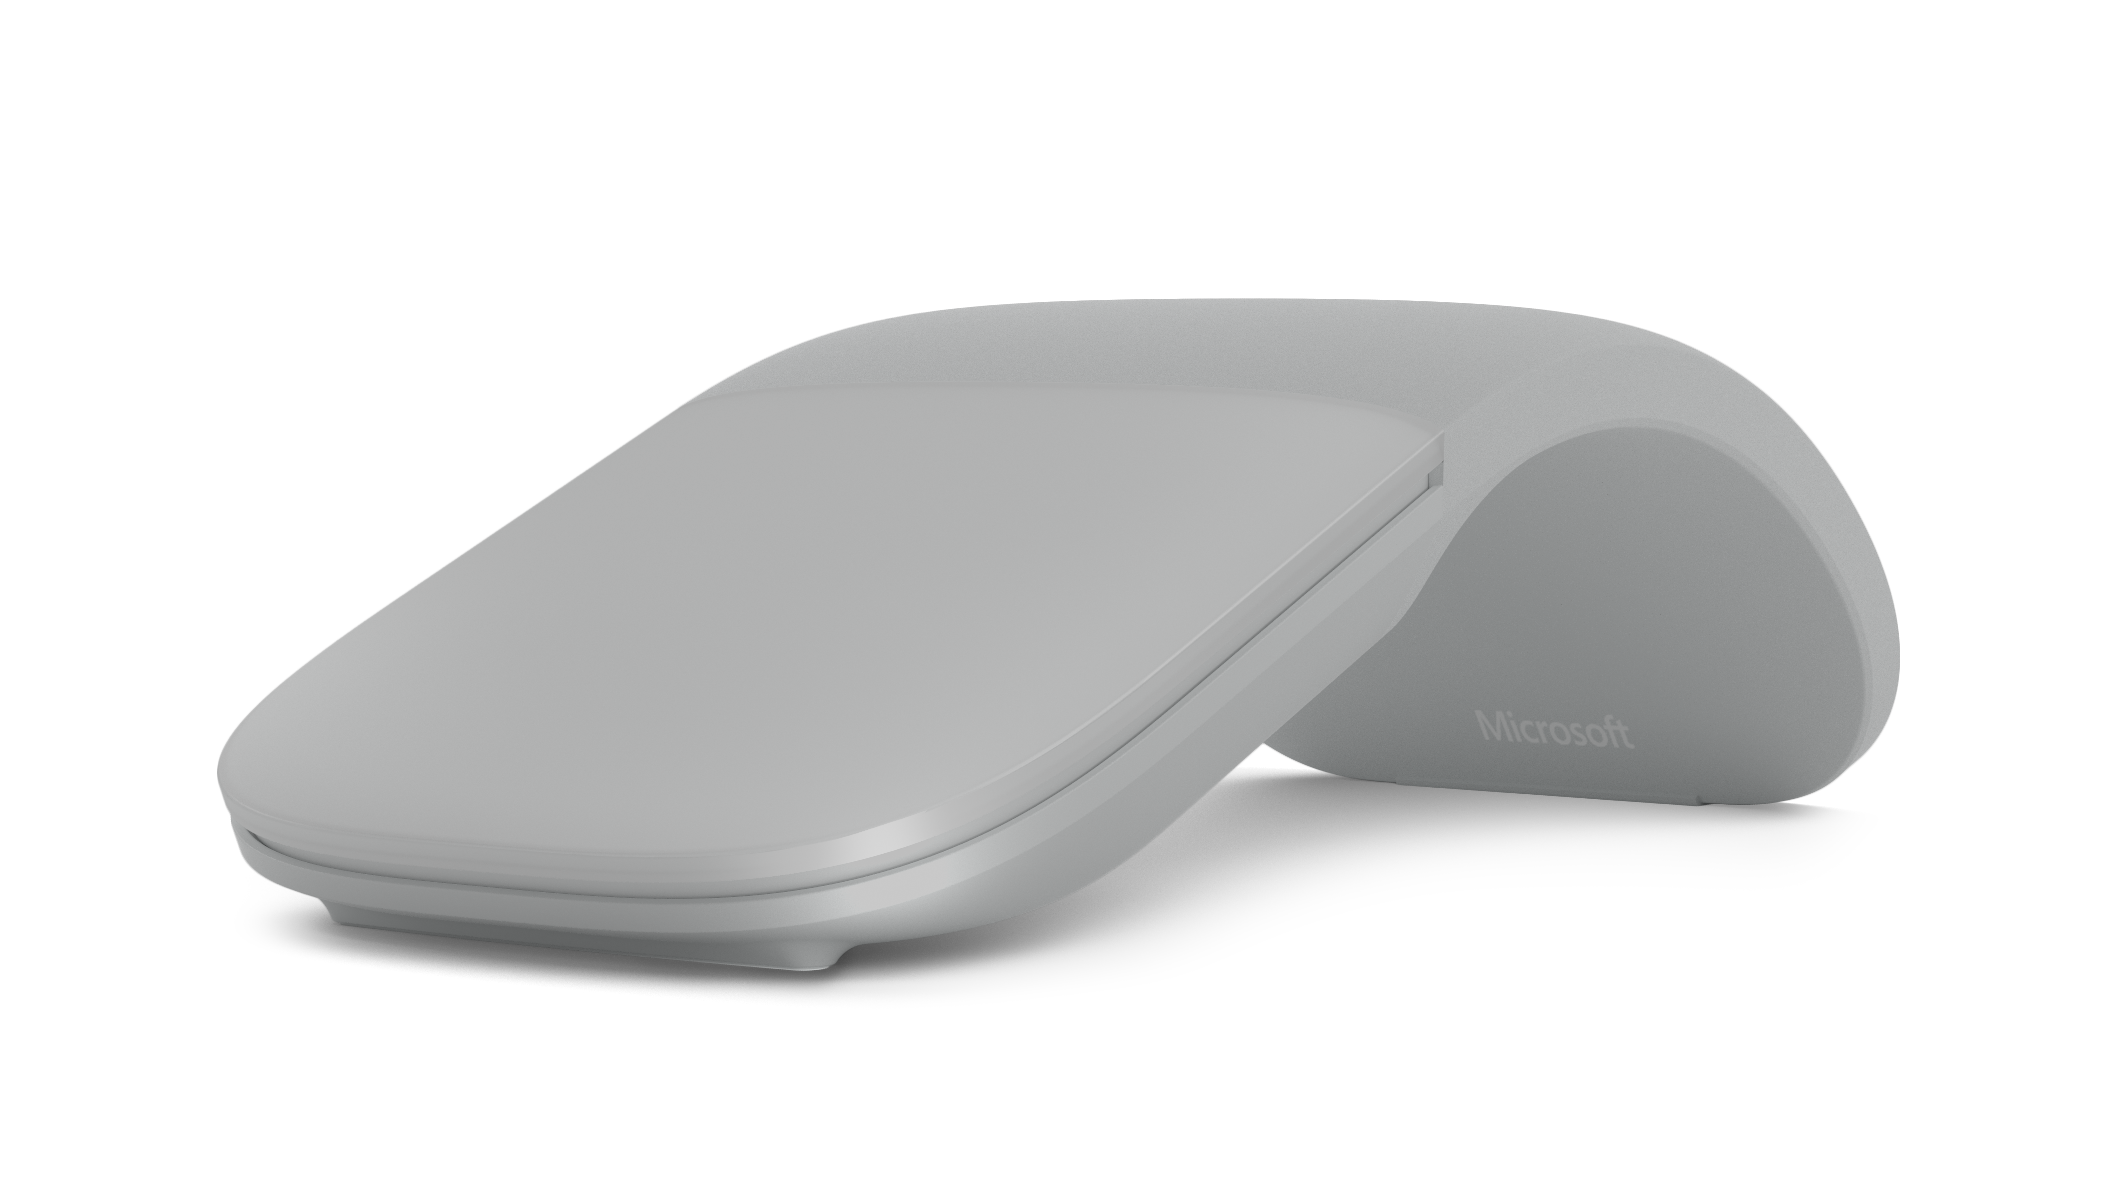 板状収納　MicroSoft　Surface Arc Mouse 　1024